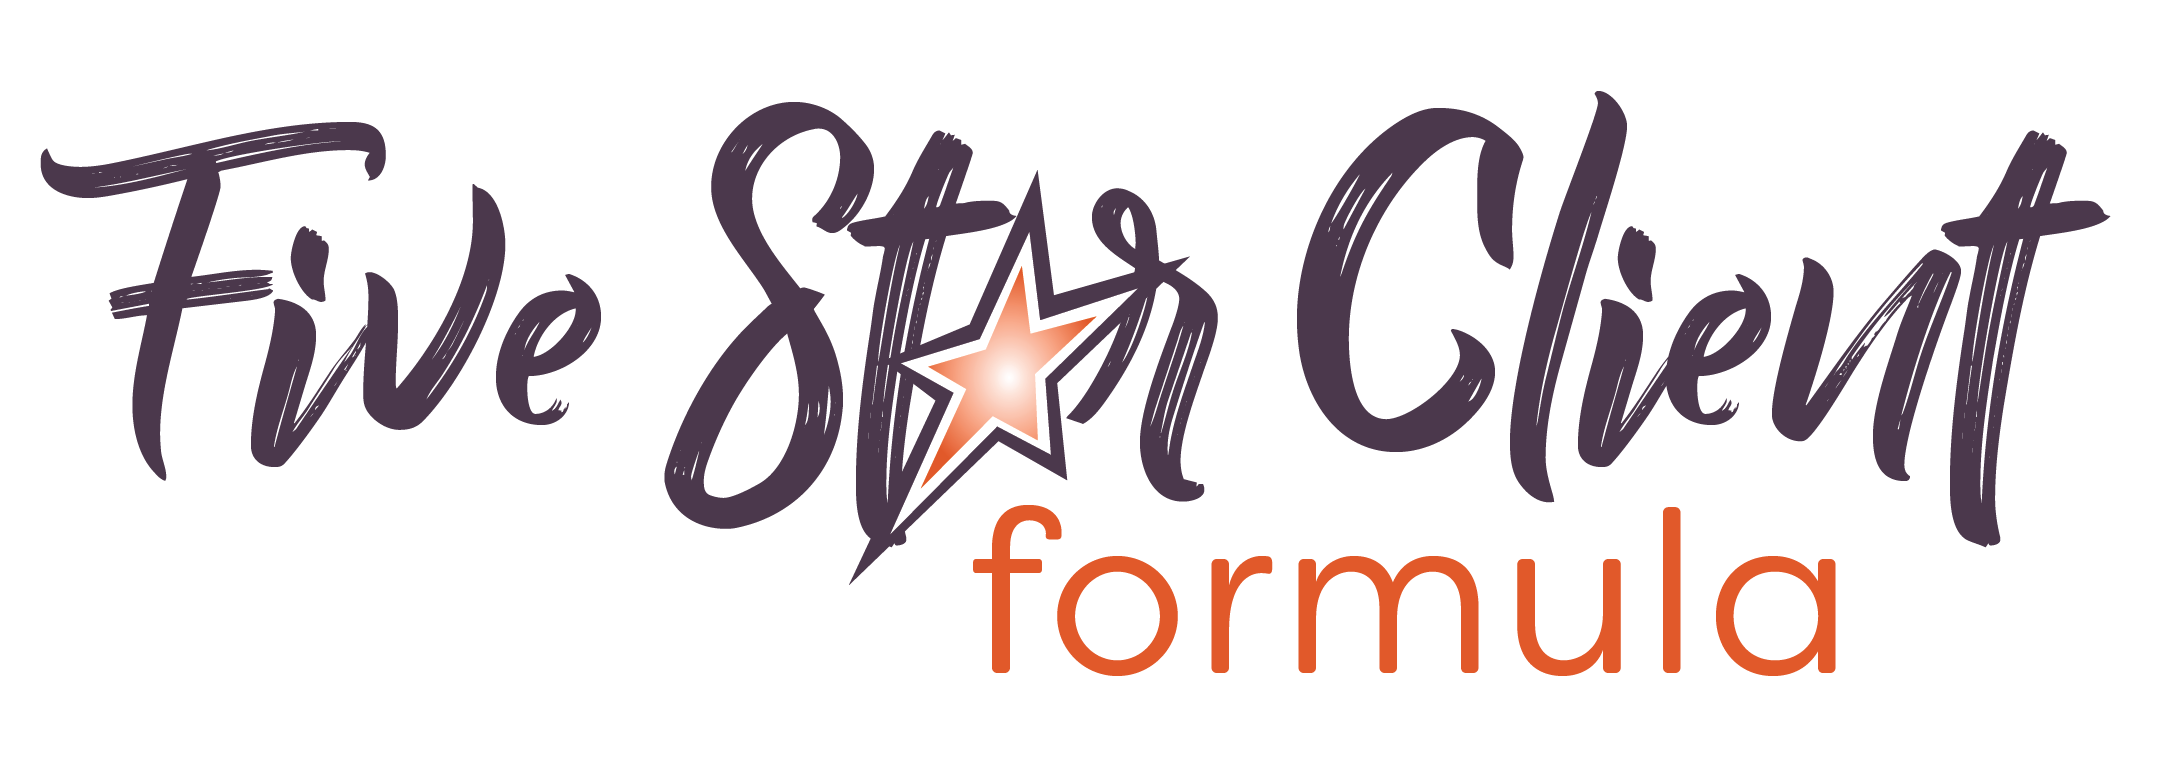 Five Star Client Formula